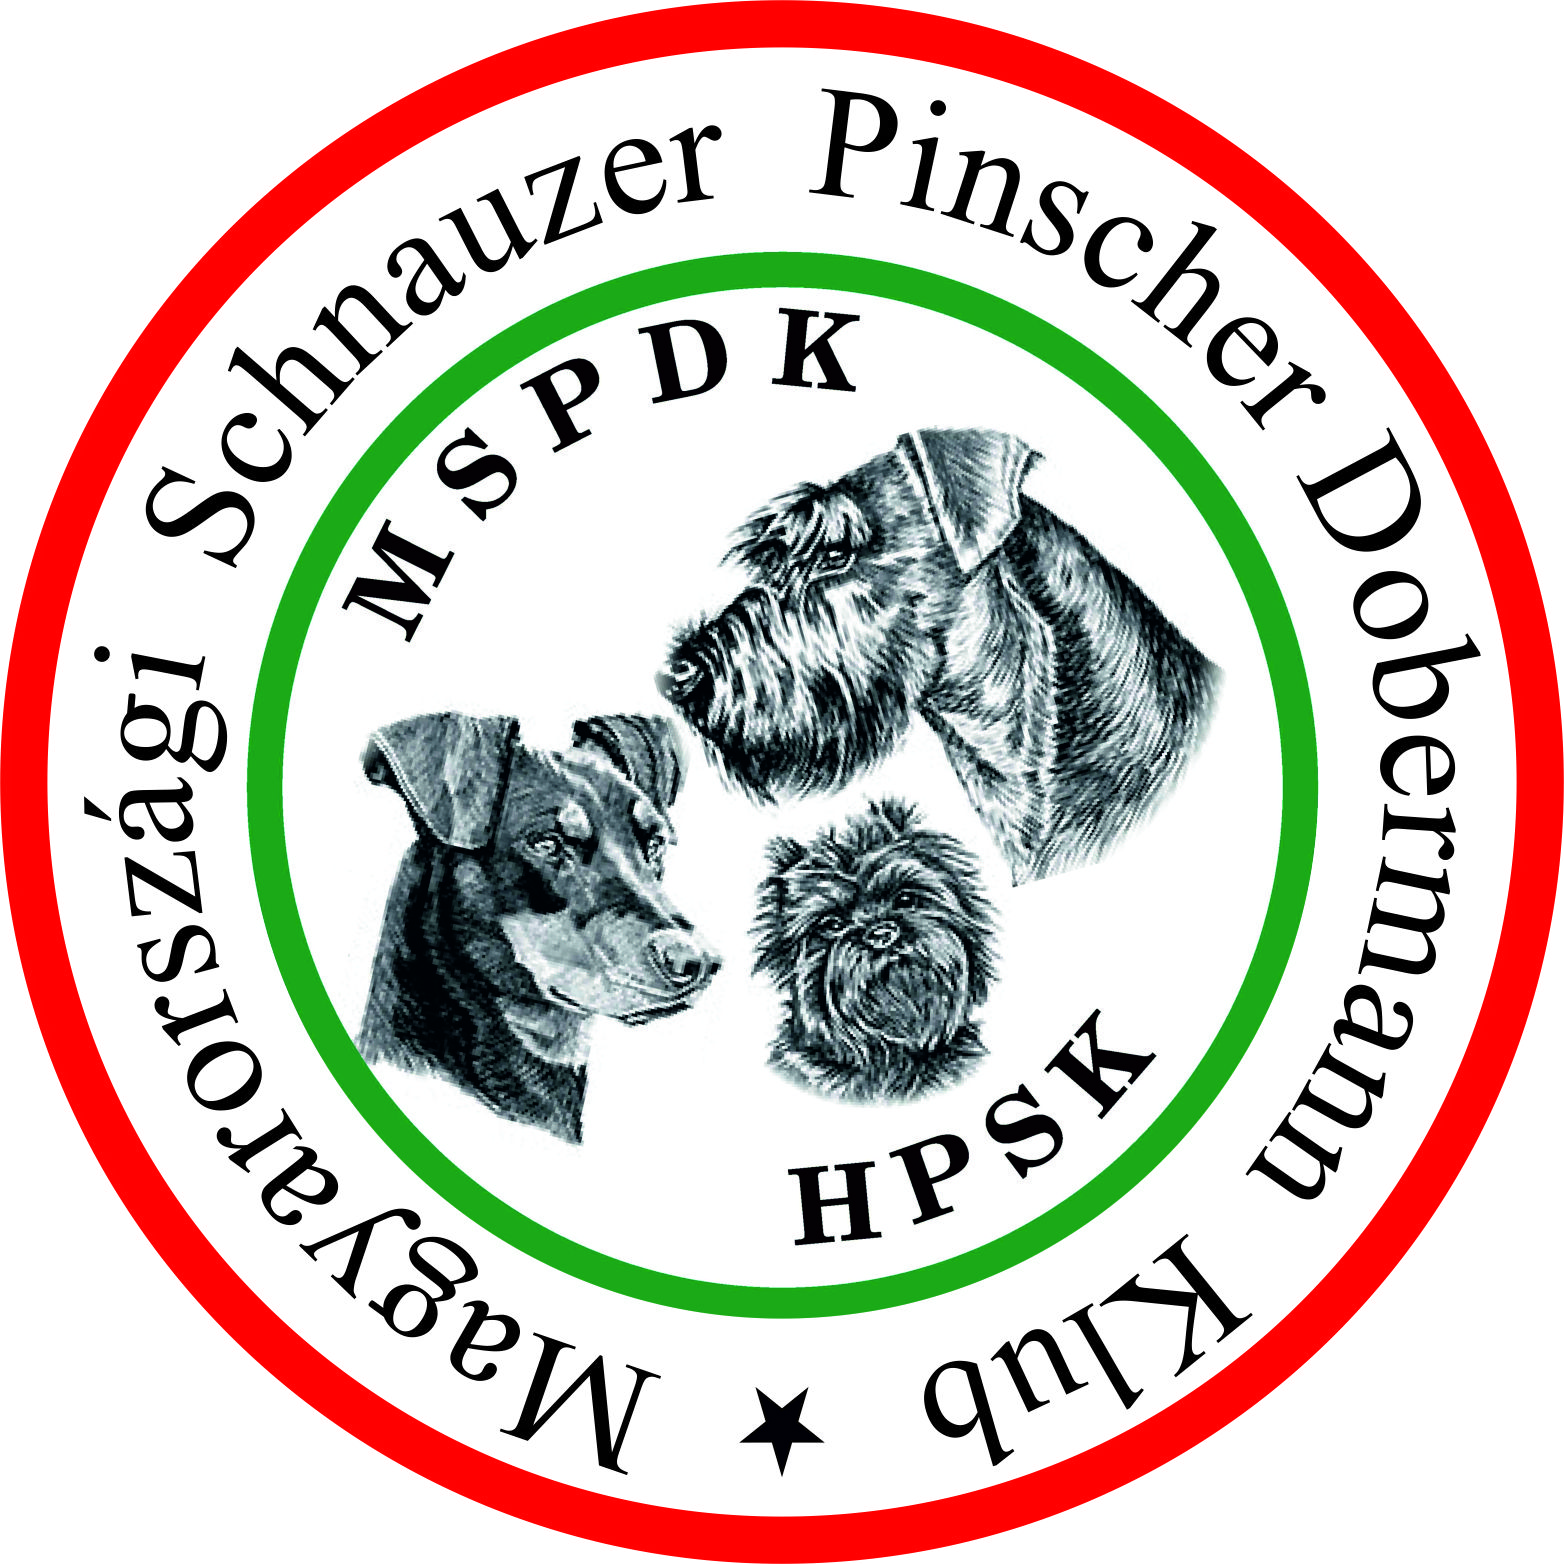 mspdk logo